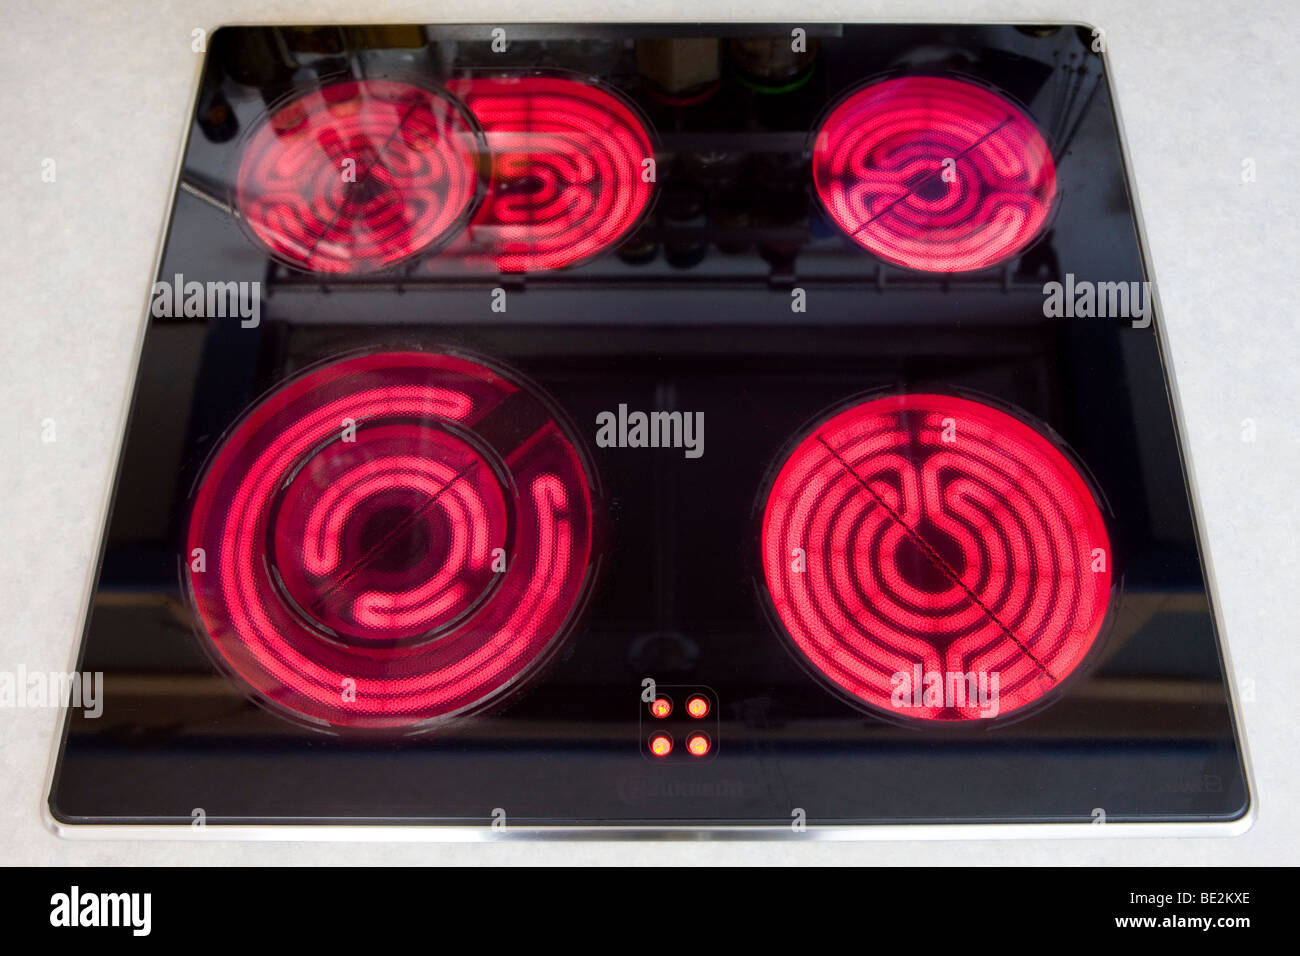 Glowing hotplates Stock Photo